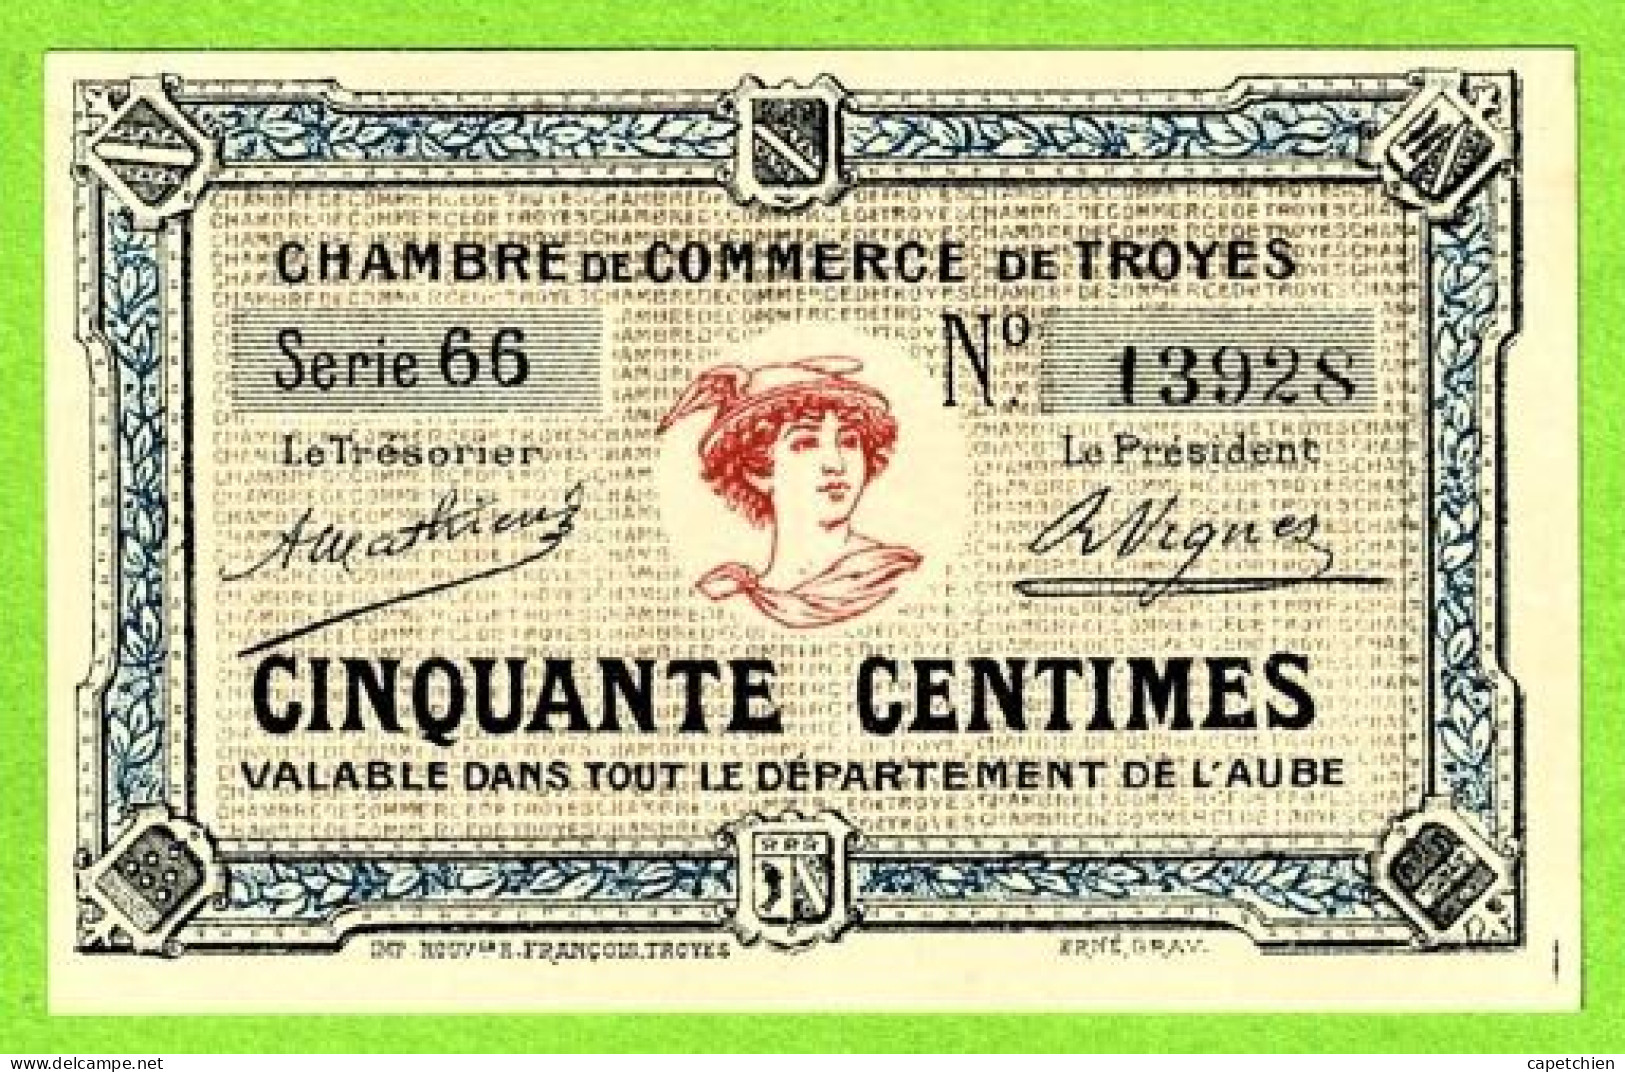 FRANCE / CHAMBRE De COMMERCE De TROYES/ 50 CENTIMES / 13928 /  SERIE 66 - Handelskammer